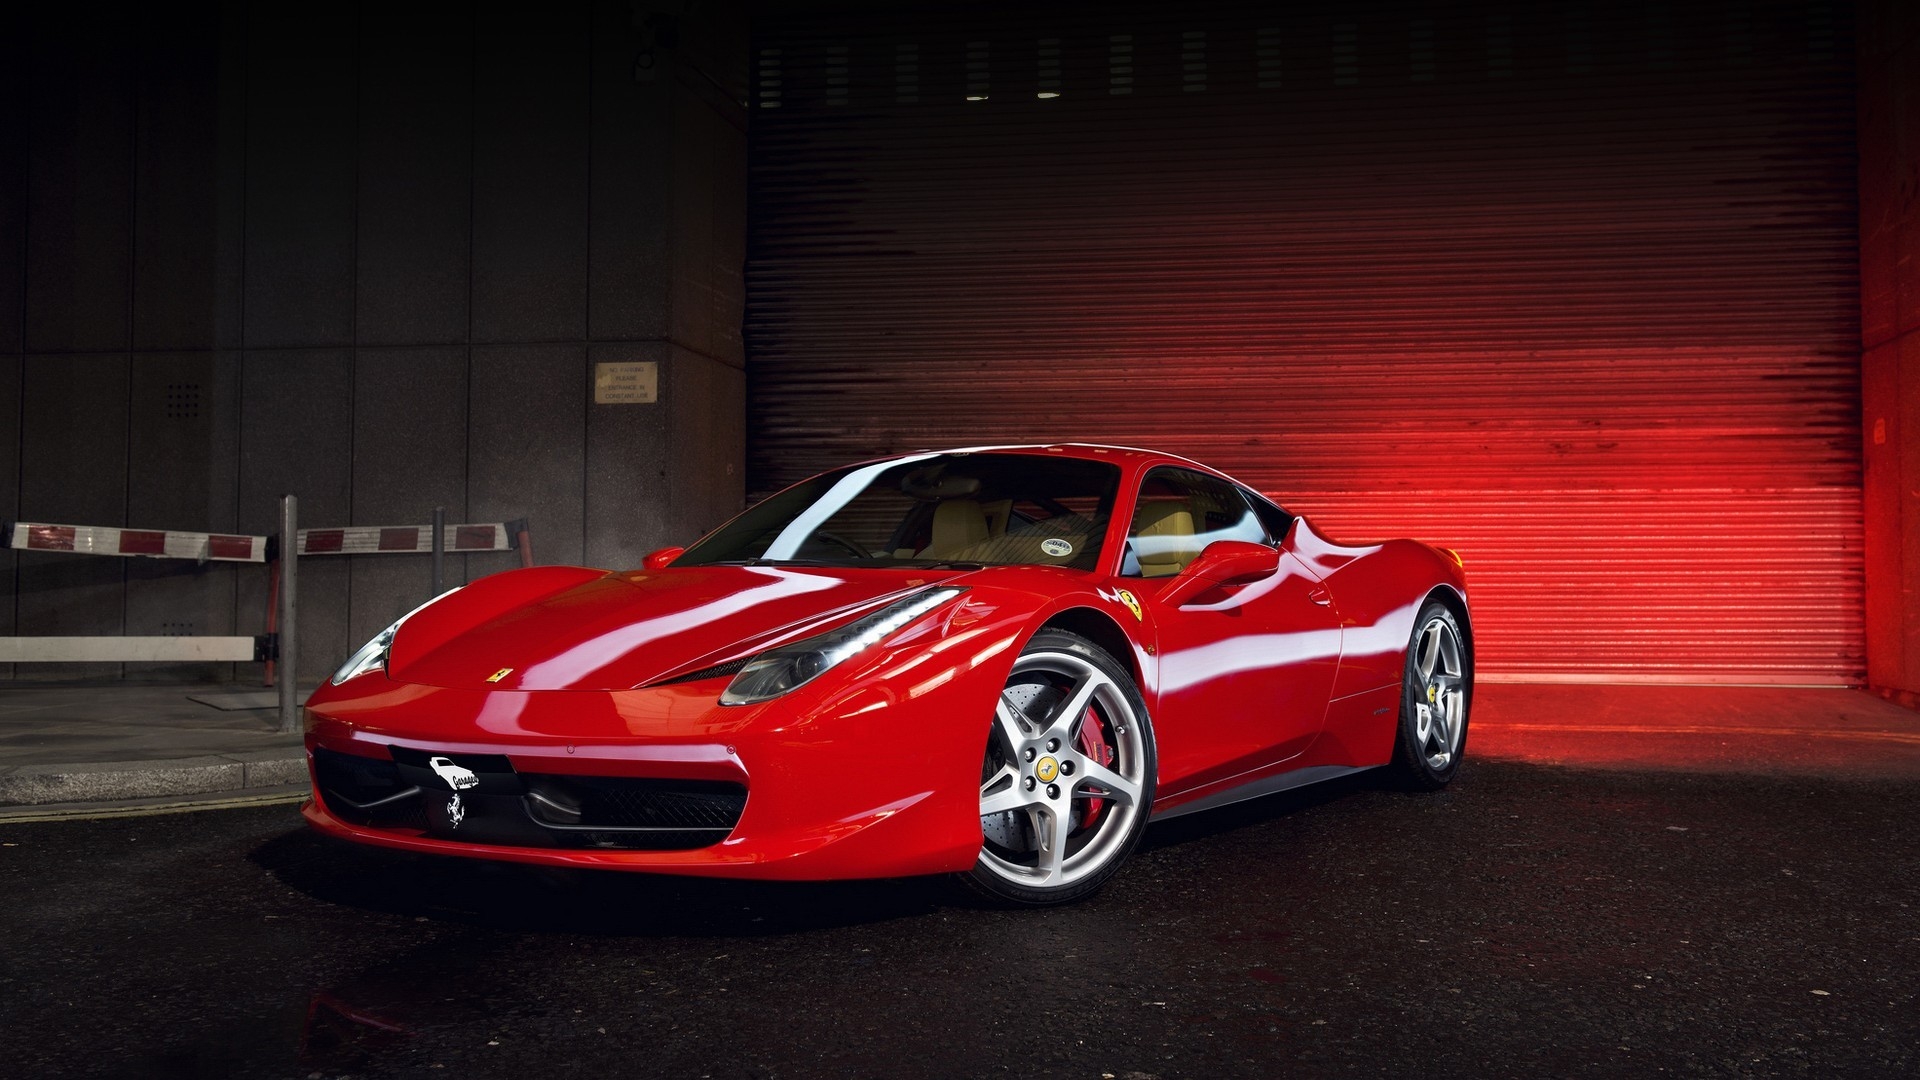 Red Ferrari 458 Italia for 1920 x 1080 HDTV 1080p resolution